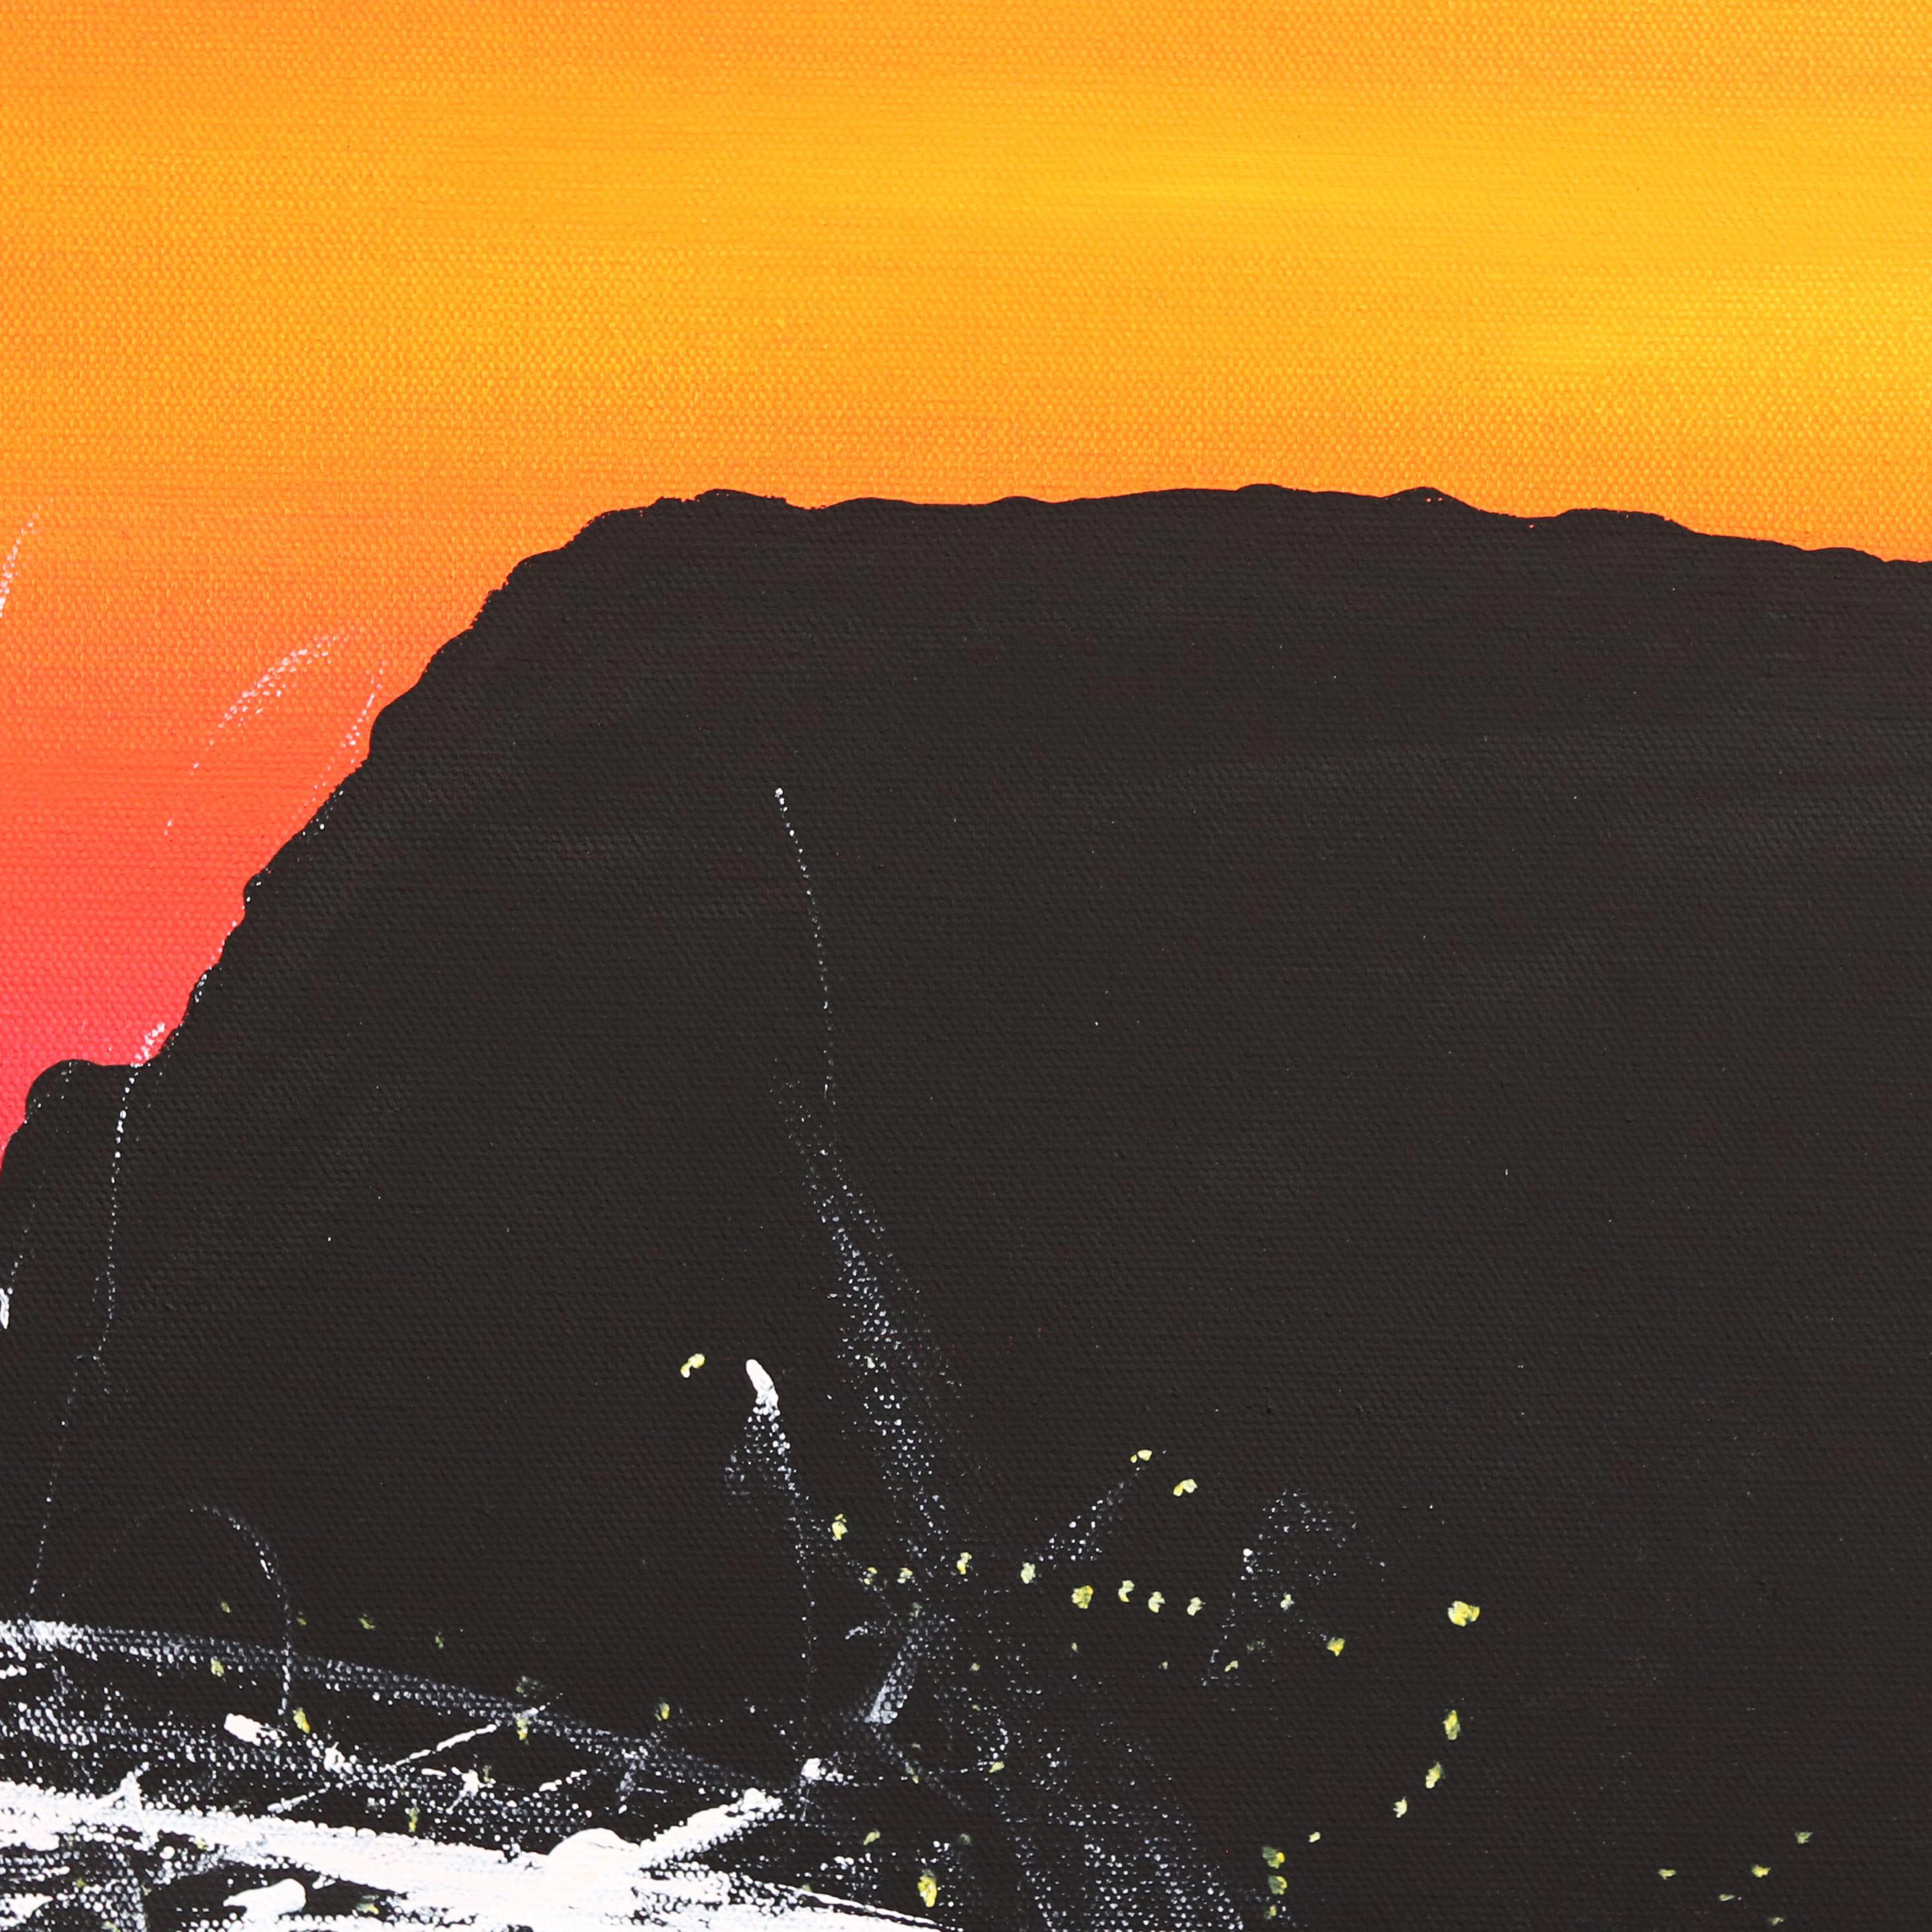 Canyon Sunset - Black Abstract Painting by Pete Kasprzak